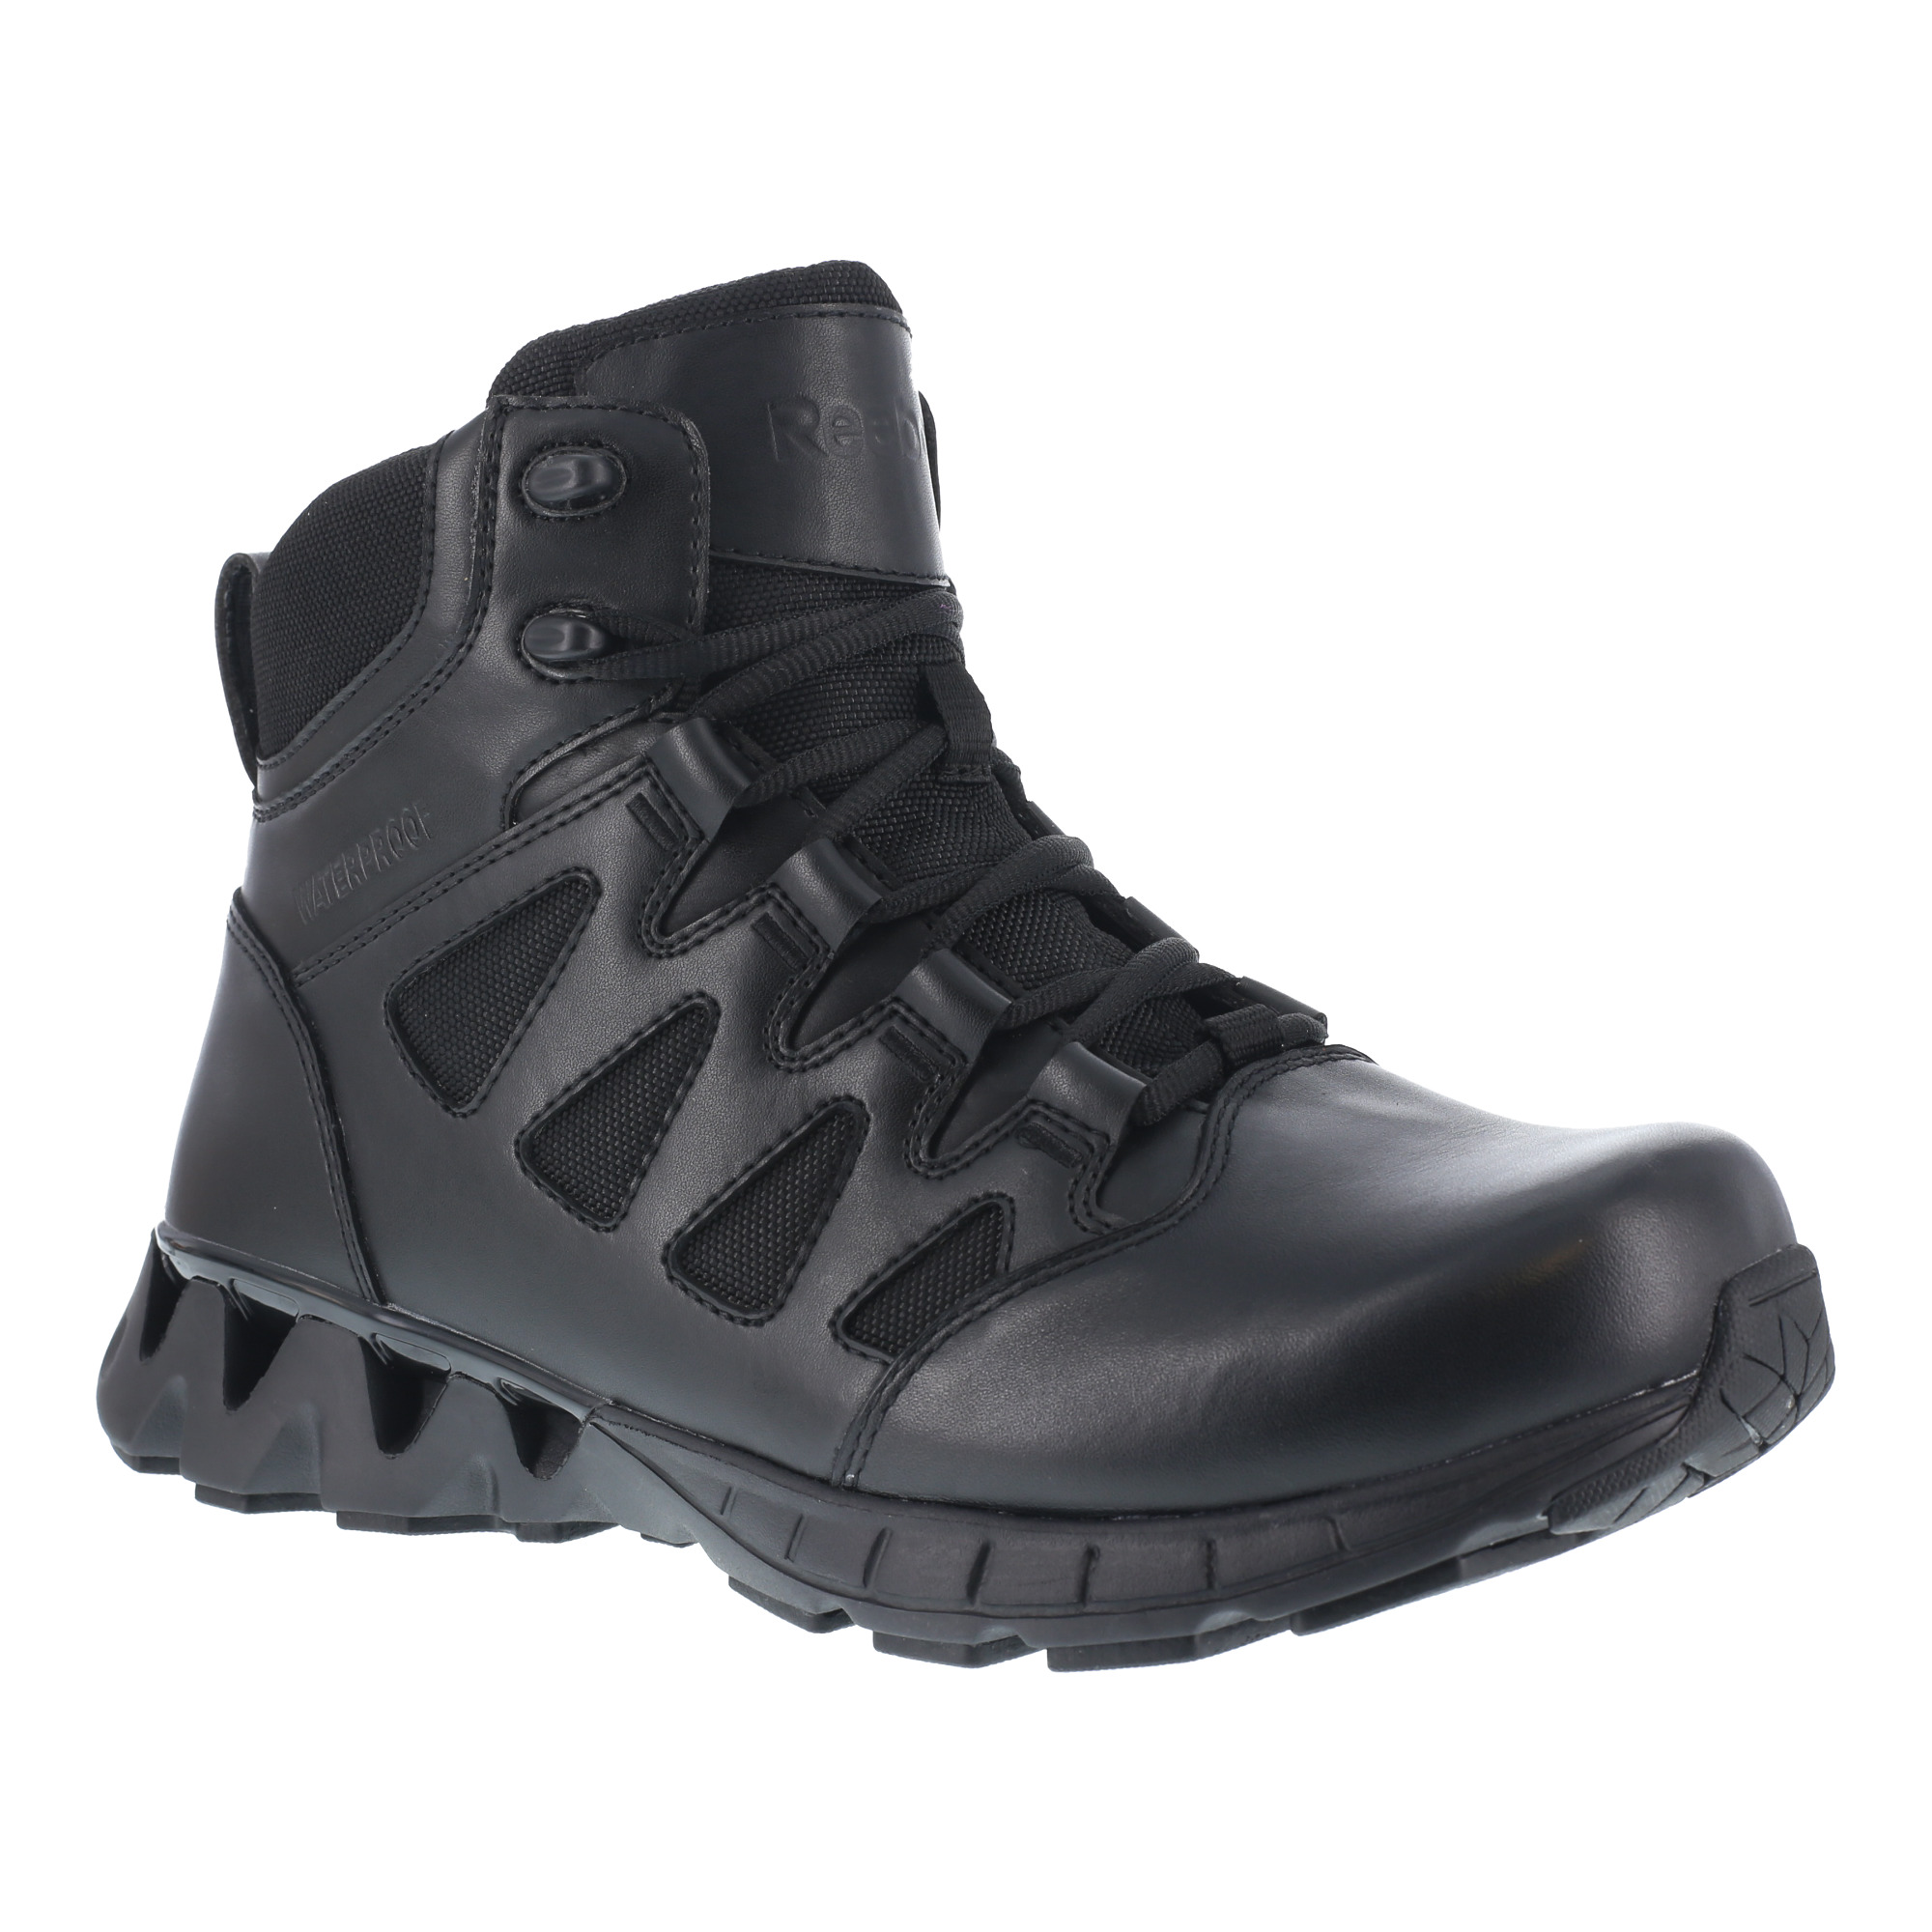 Reebok Work Men's ZigKick Tactical 6" Soft Toe Waterproof Boot RB8630 Wide Width Available - Black